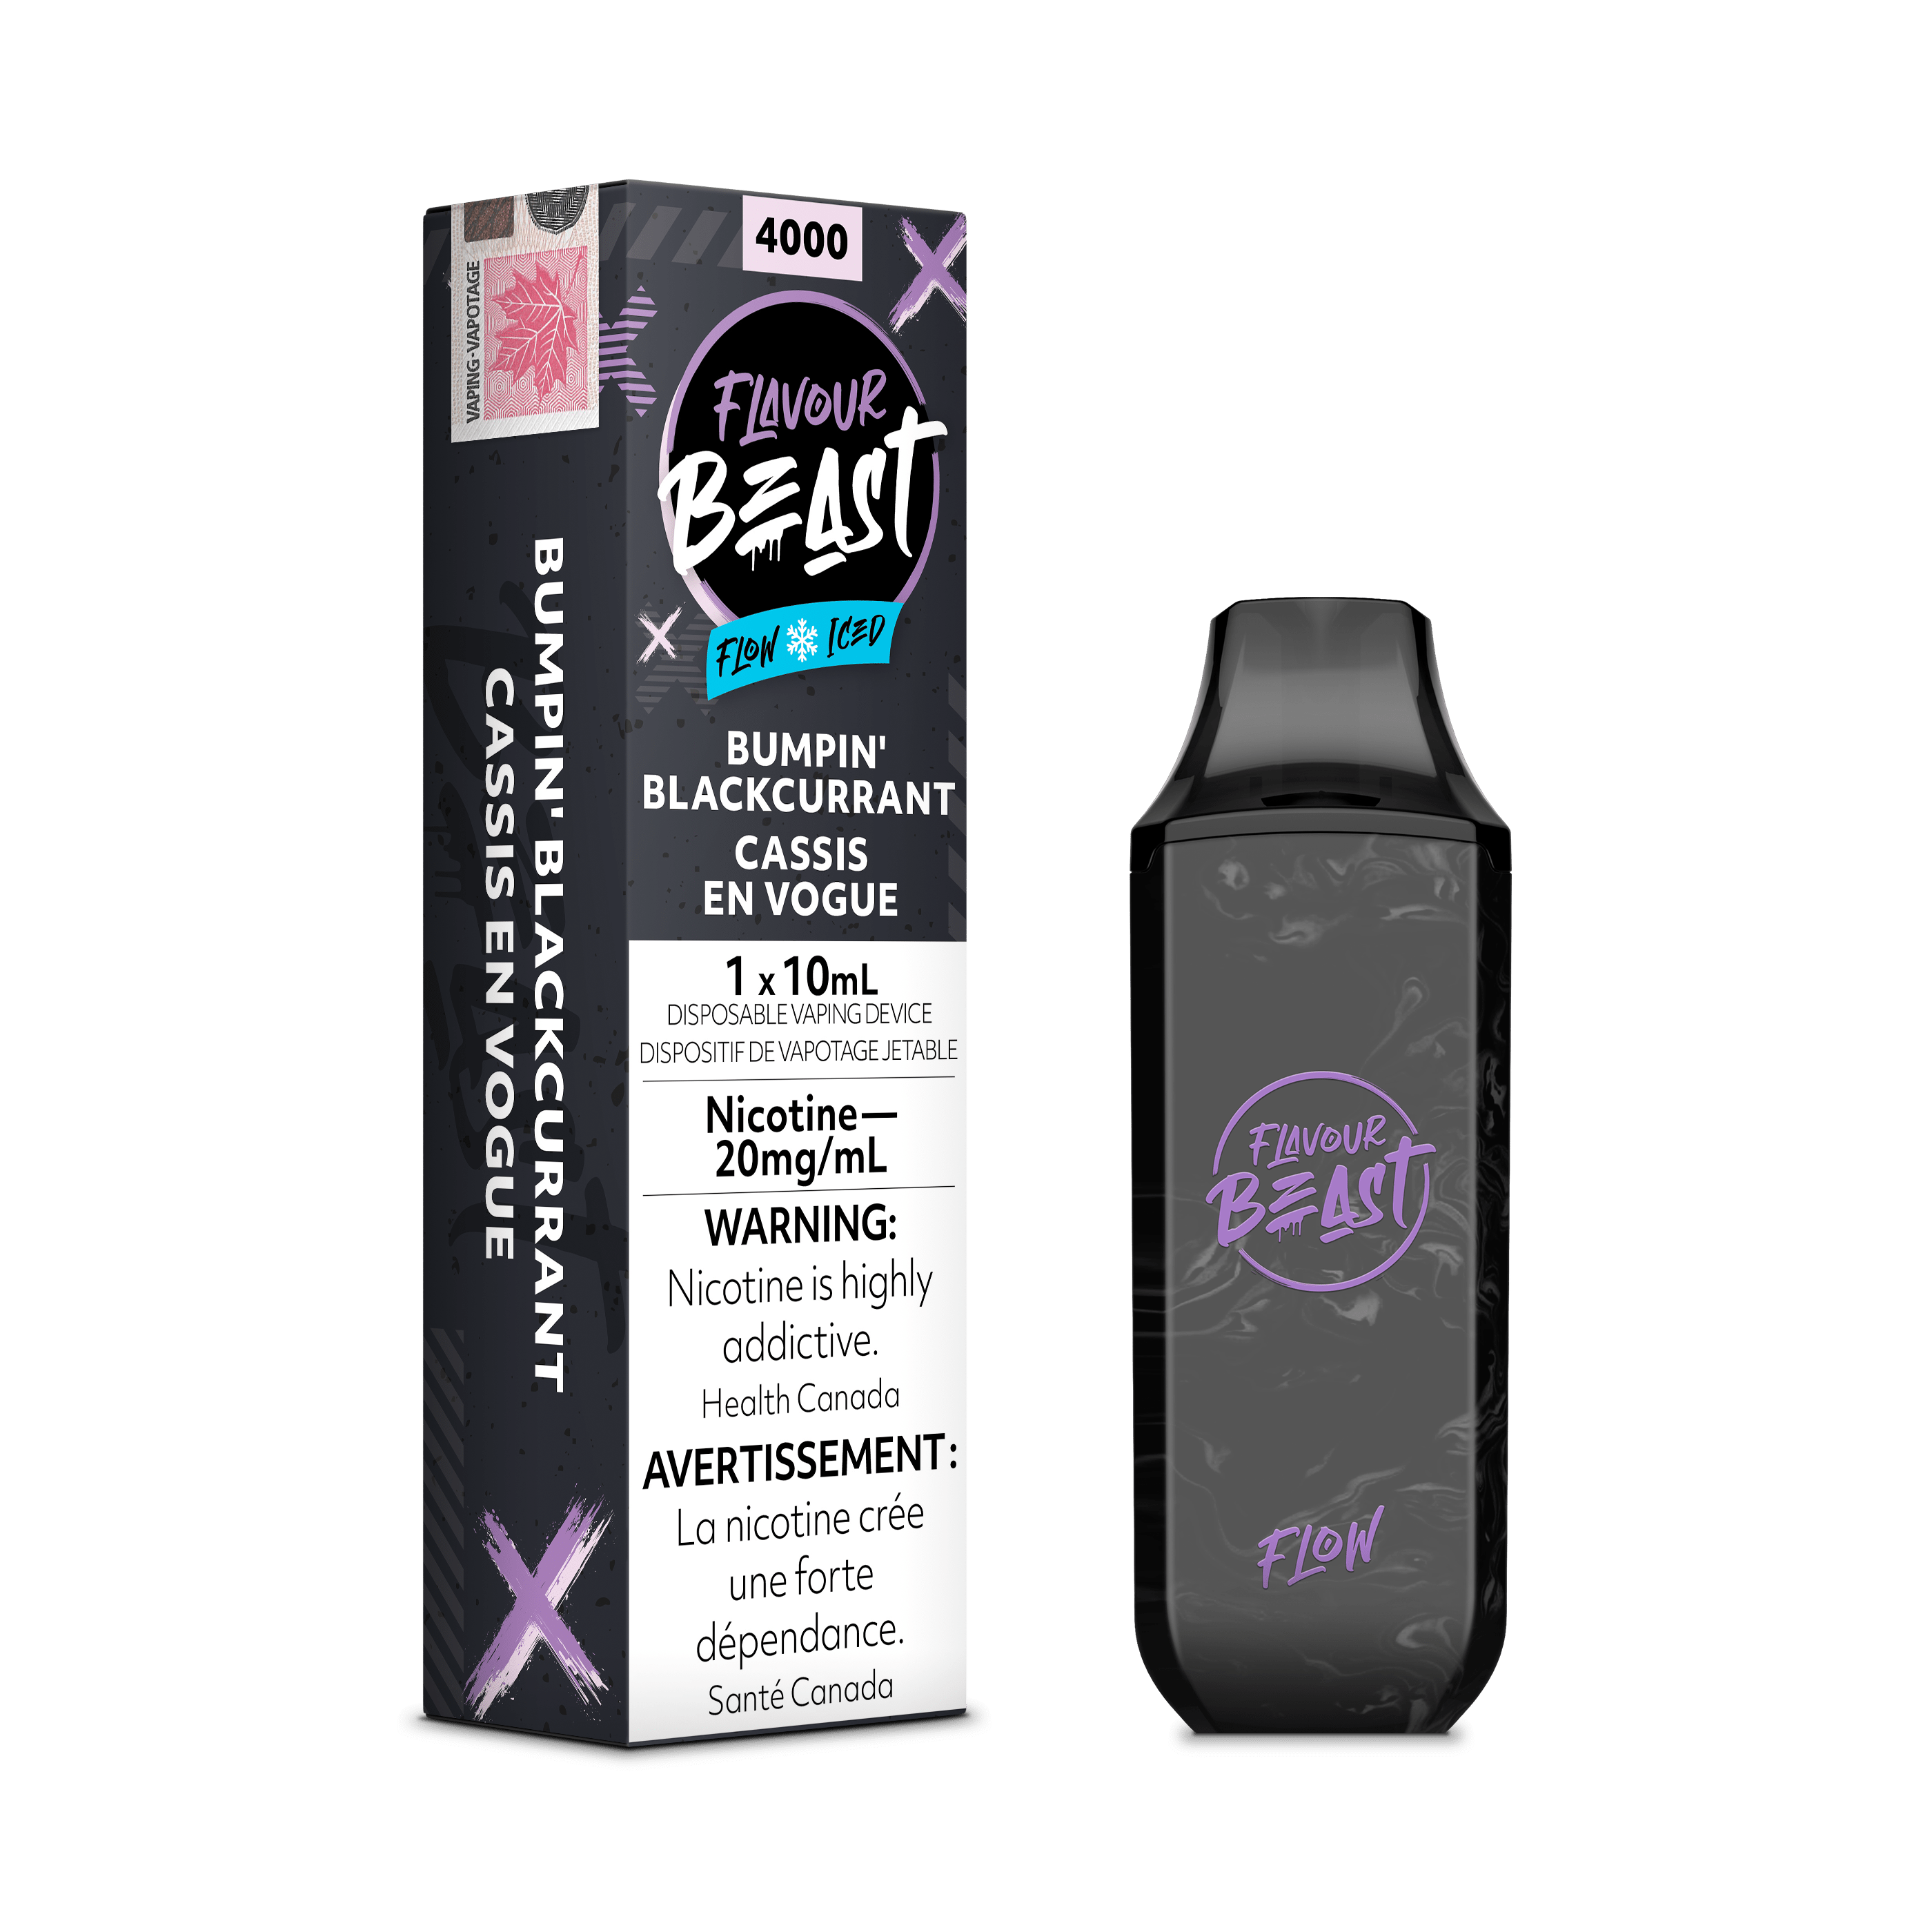 Flavour Beast Flow Disposable Vape - Bumpin' Blackcurrant Iced available on Canada online vape shop